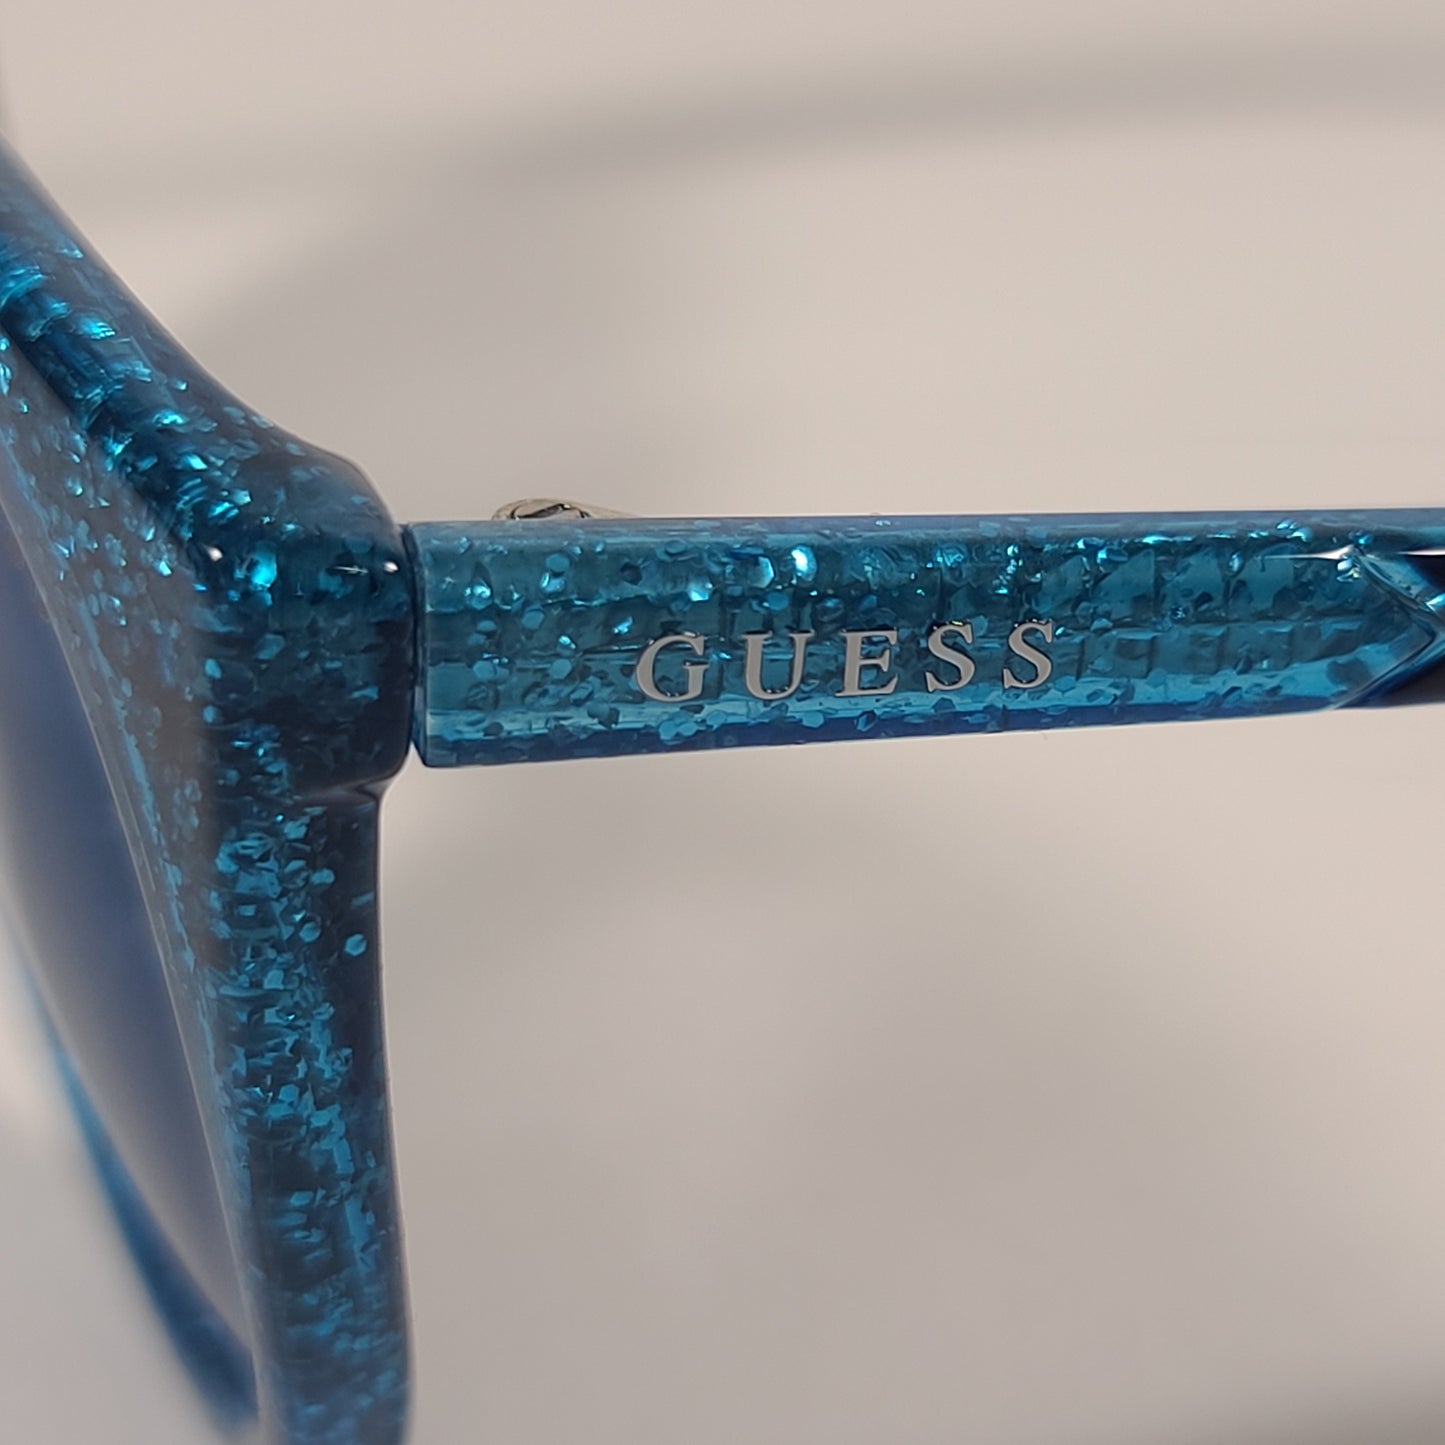 Guess Originals Round Sunglasses Blue Glitter Frame Blue Mirror Lens GU9188 92X - Sunglasses